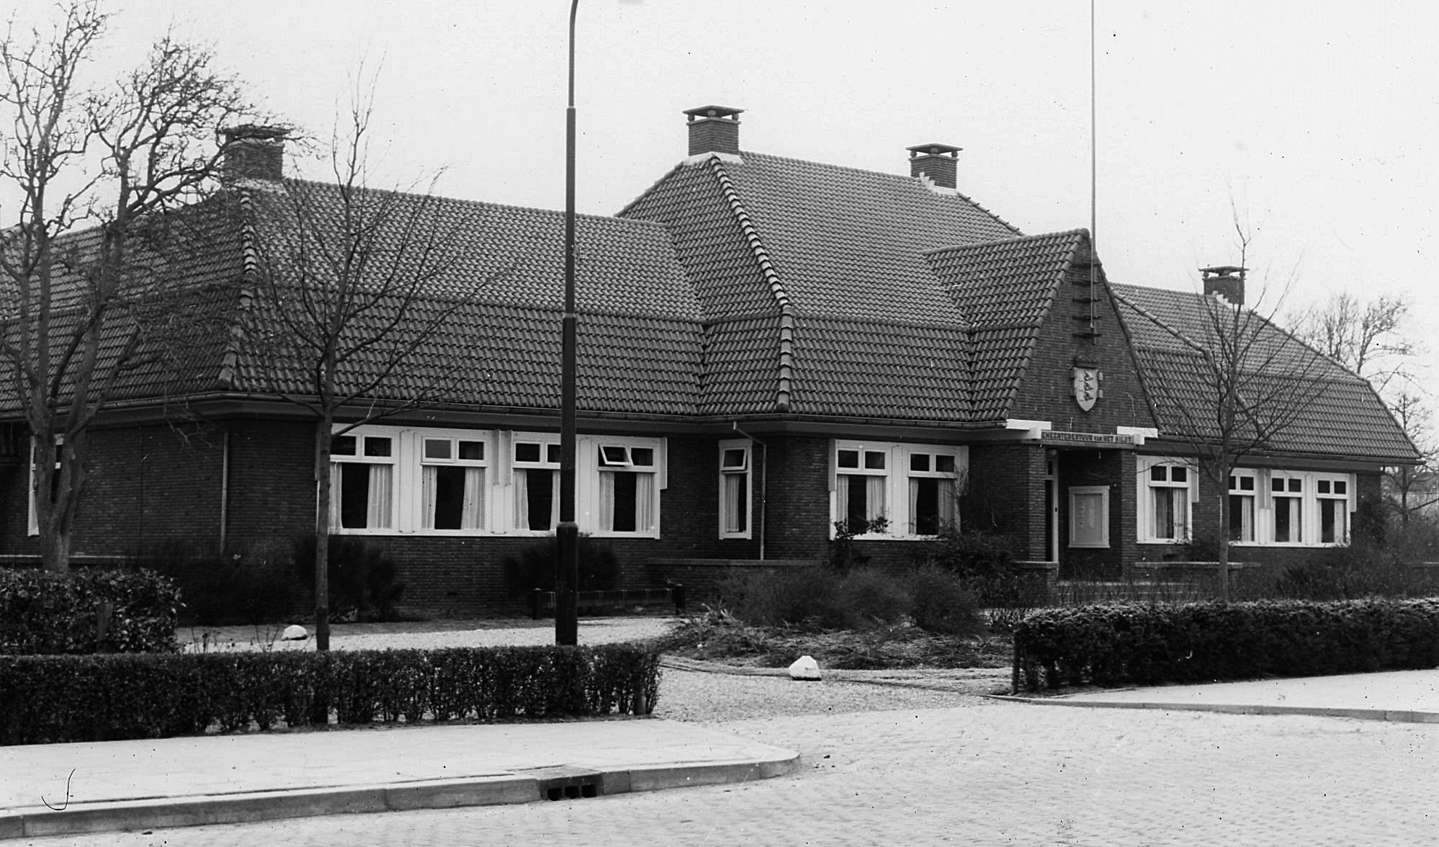 Gemeentehuis in St. Annaparochie, voormalige gemeente het Bildt (foto Bildts Aigene)